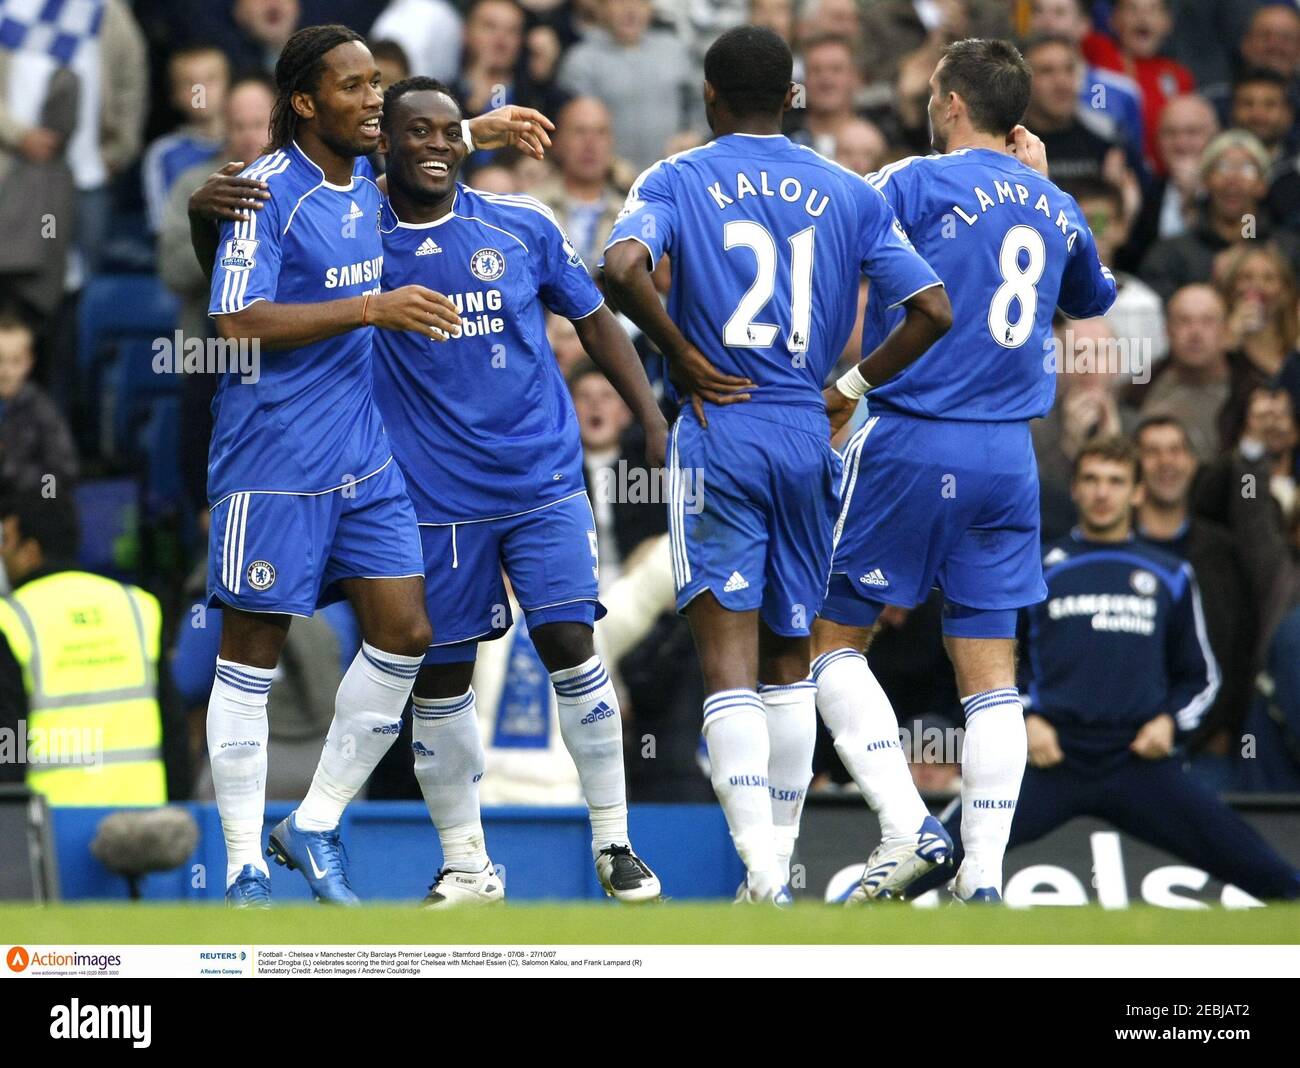 Football Chelsea v Manchester City Barclays Premier League - Stamford Bridge - 07/08 - 27/10/07 Didier Drogba celebrates scoring the third goal for Chelsea Michael Essien (C), Salomon Kalou,